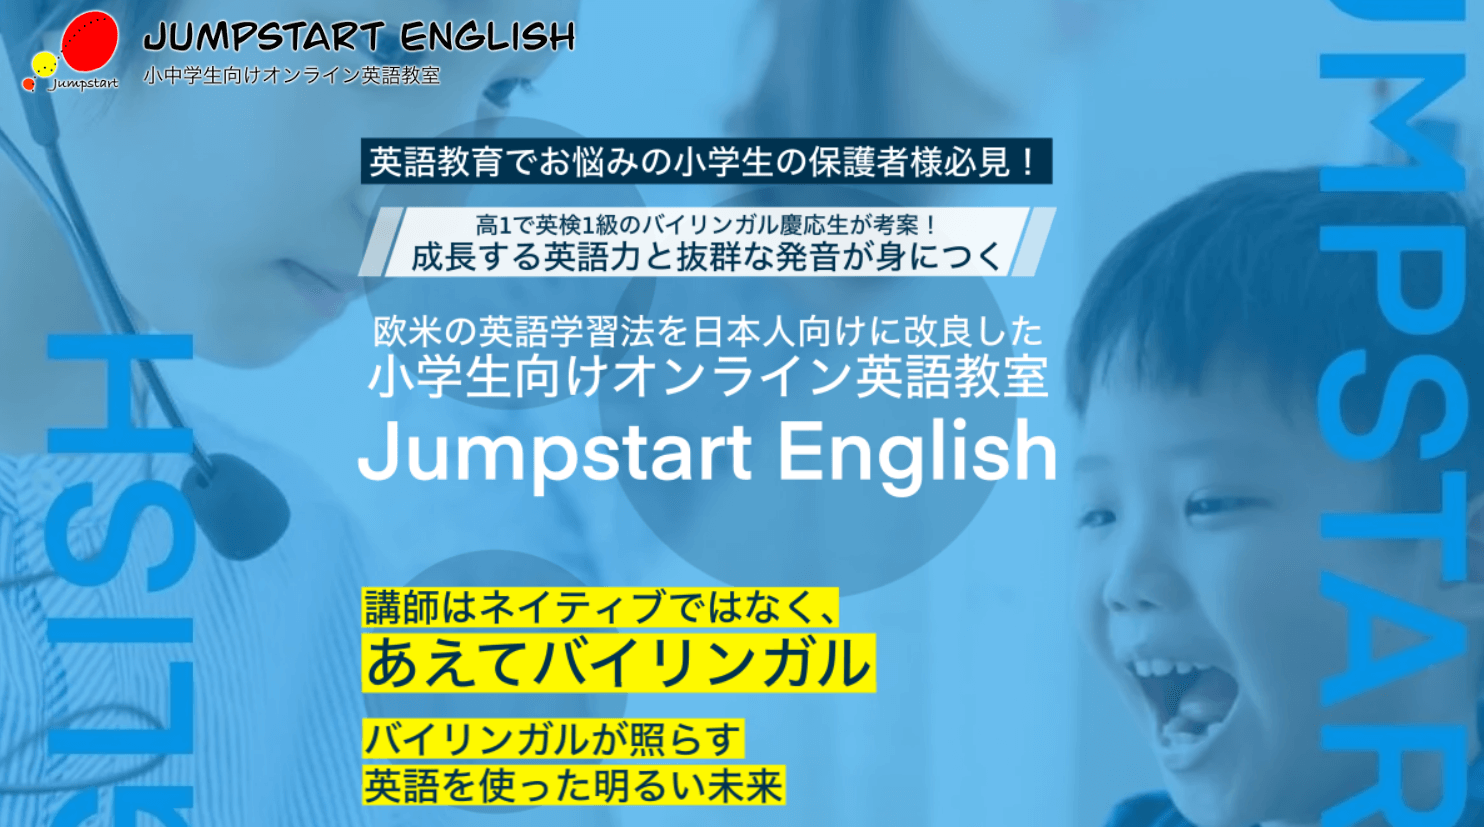 「JUMPSTART English」のオンライン英語教室が、高校生の英検1級取得者による実践的な学習法で、子供の英語力を格段にアップさせます。抜群の発音とバイリンガル教育で、英語の扉を開く無料体験レッスンをお見逃しなく。